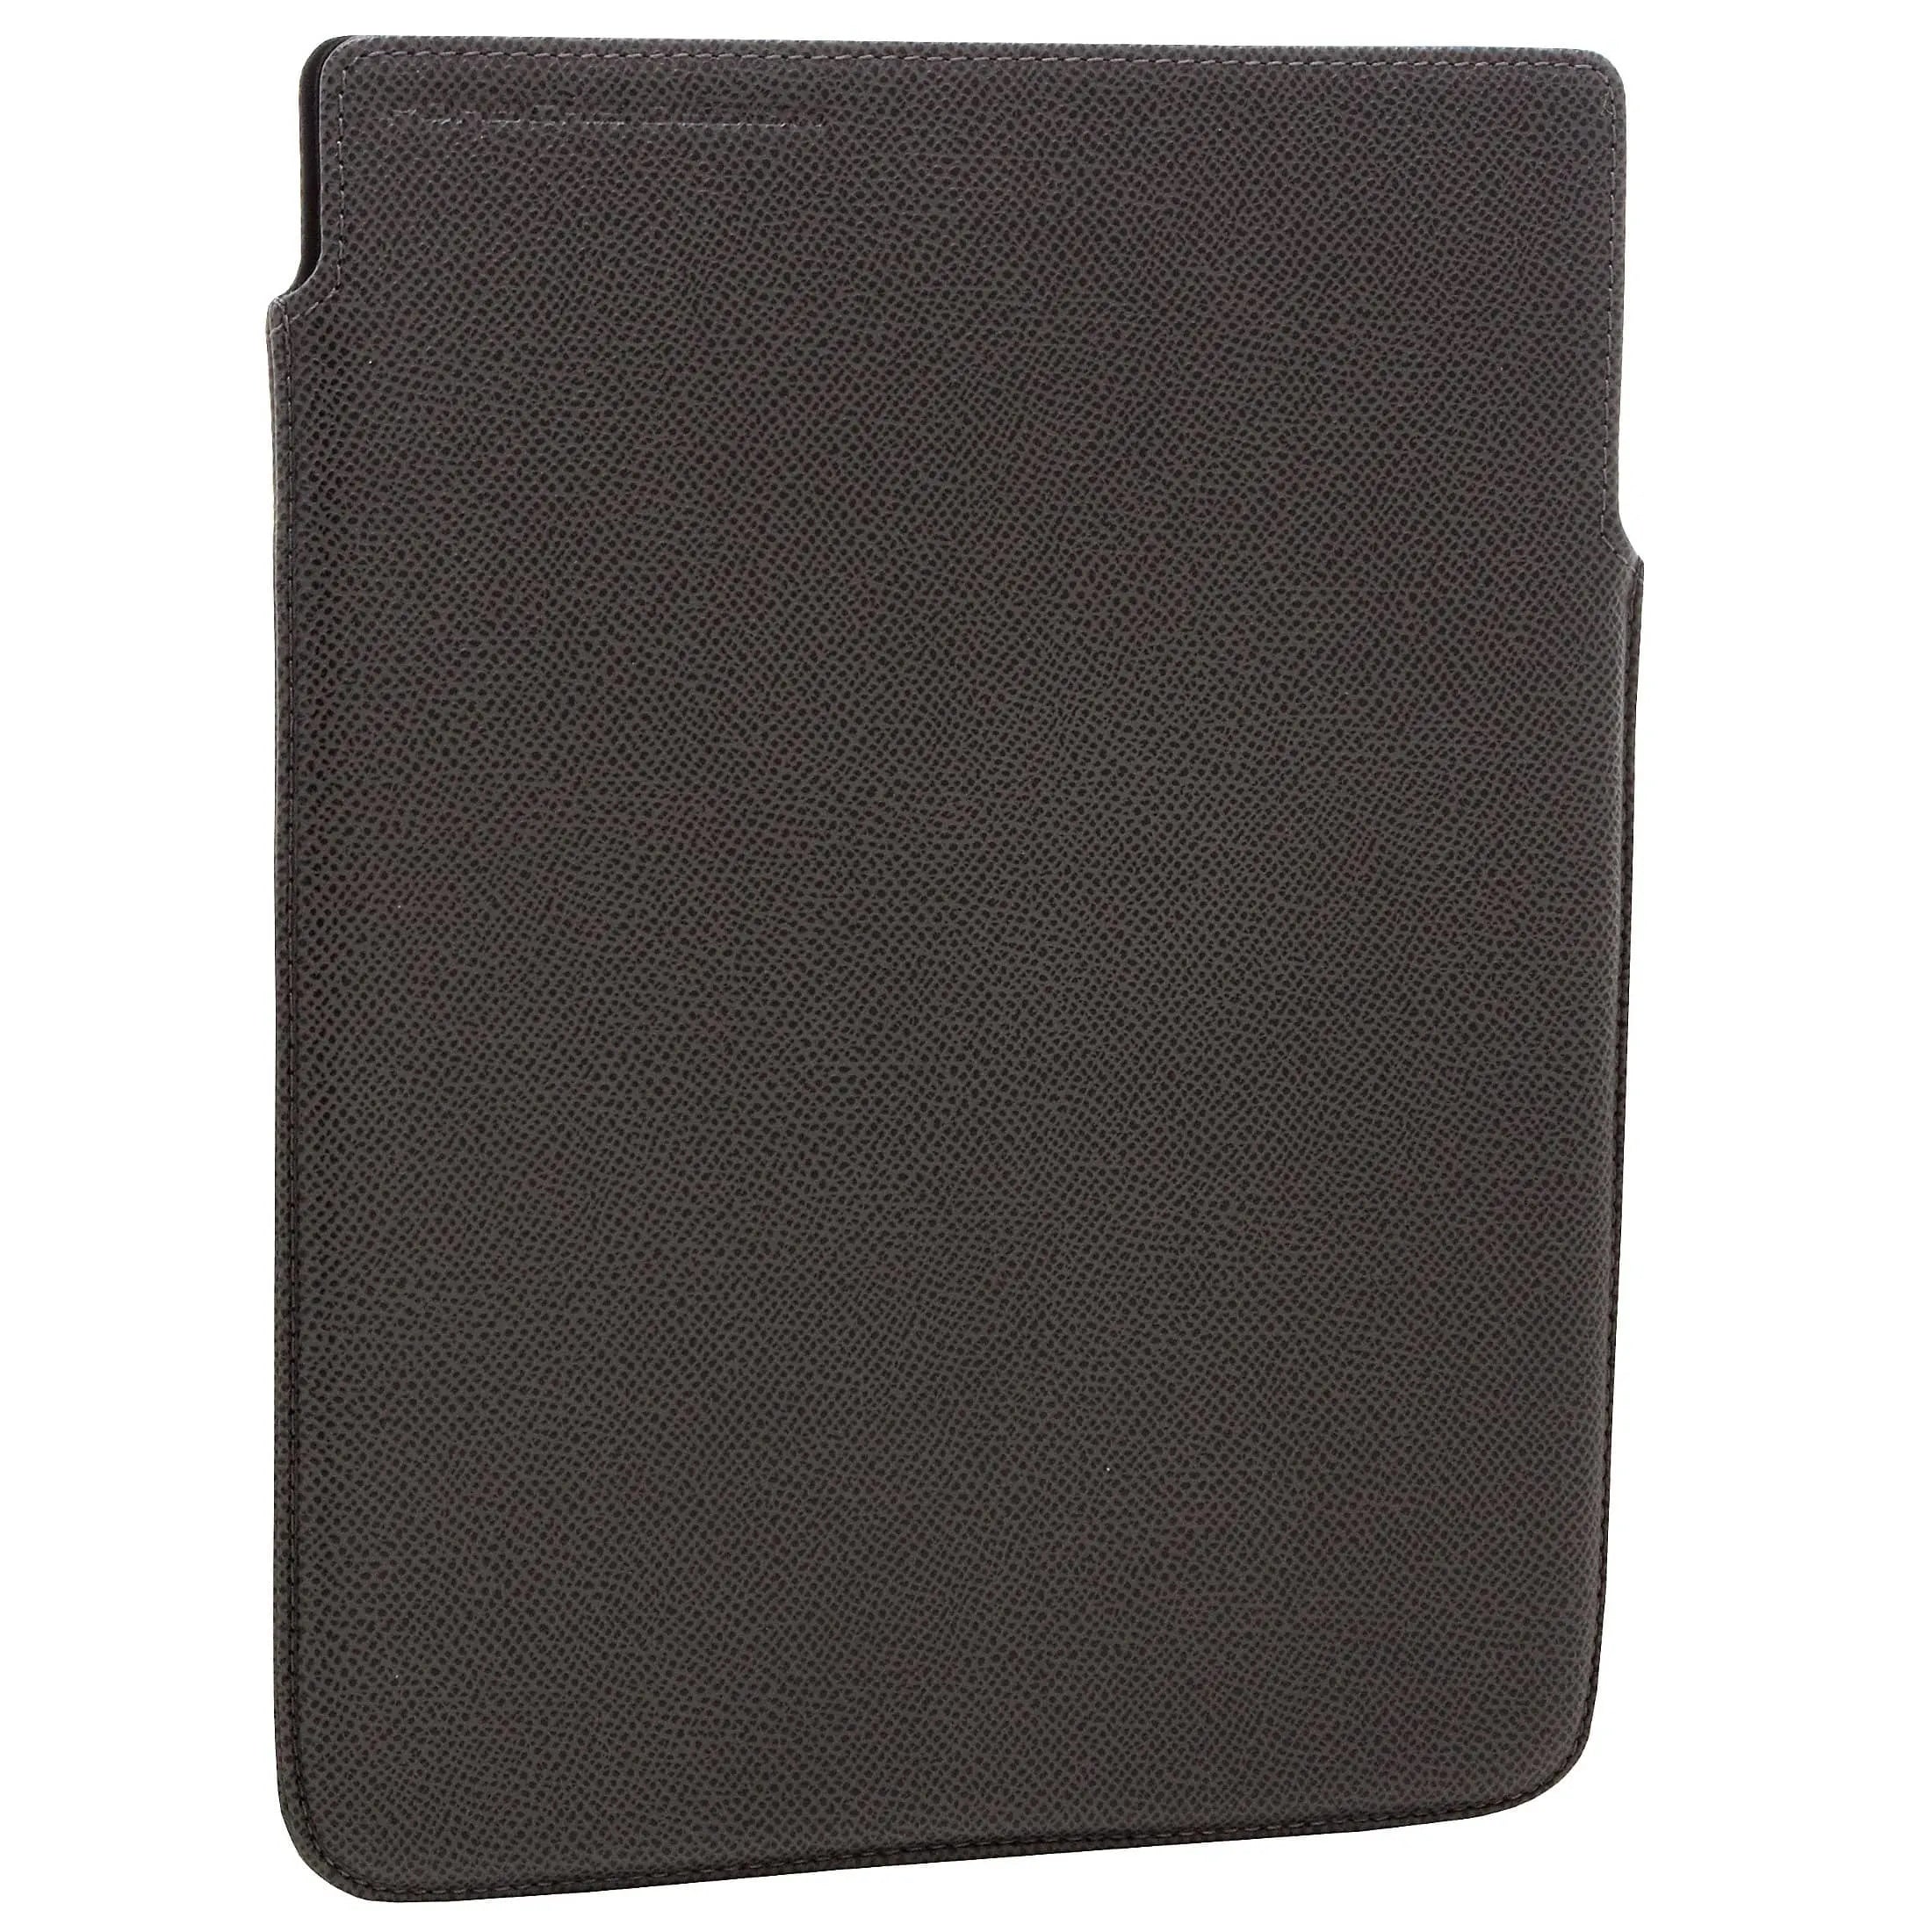 Porsche Design French Classic 2.0 Case sleeve for iPad 4 - dark gray